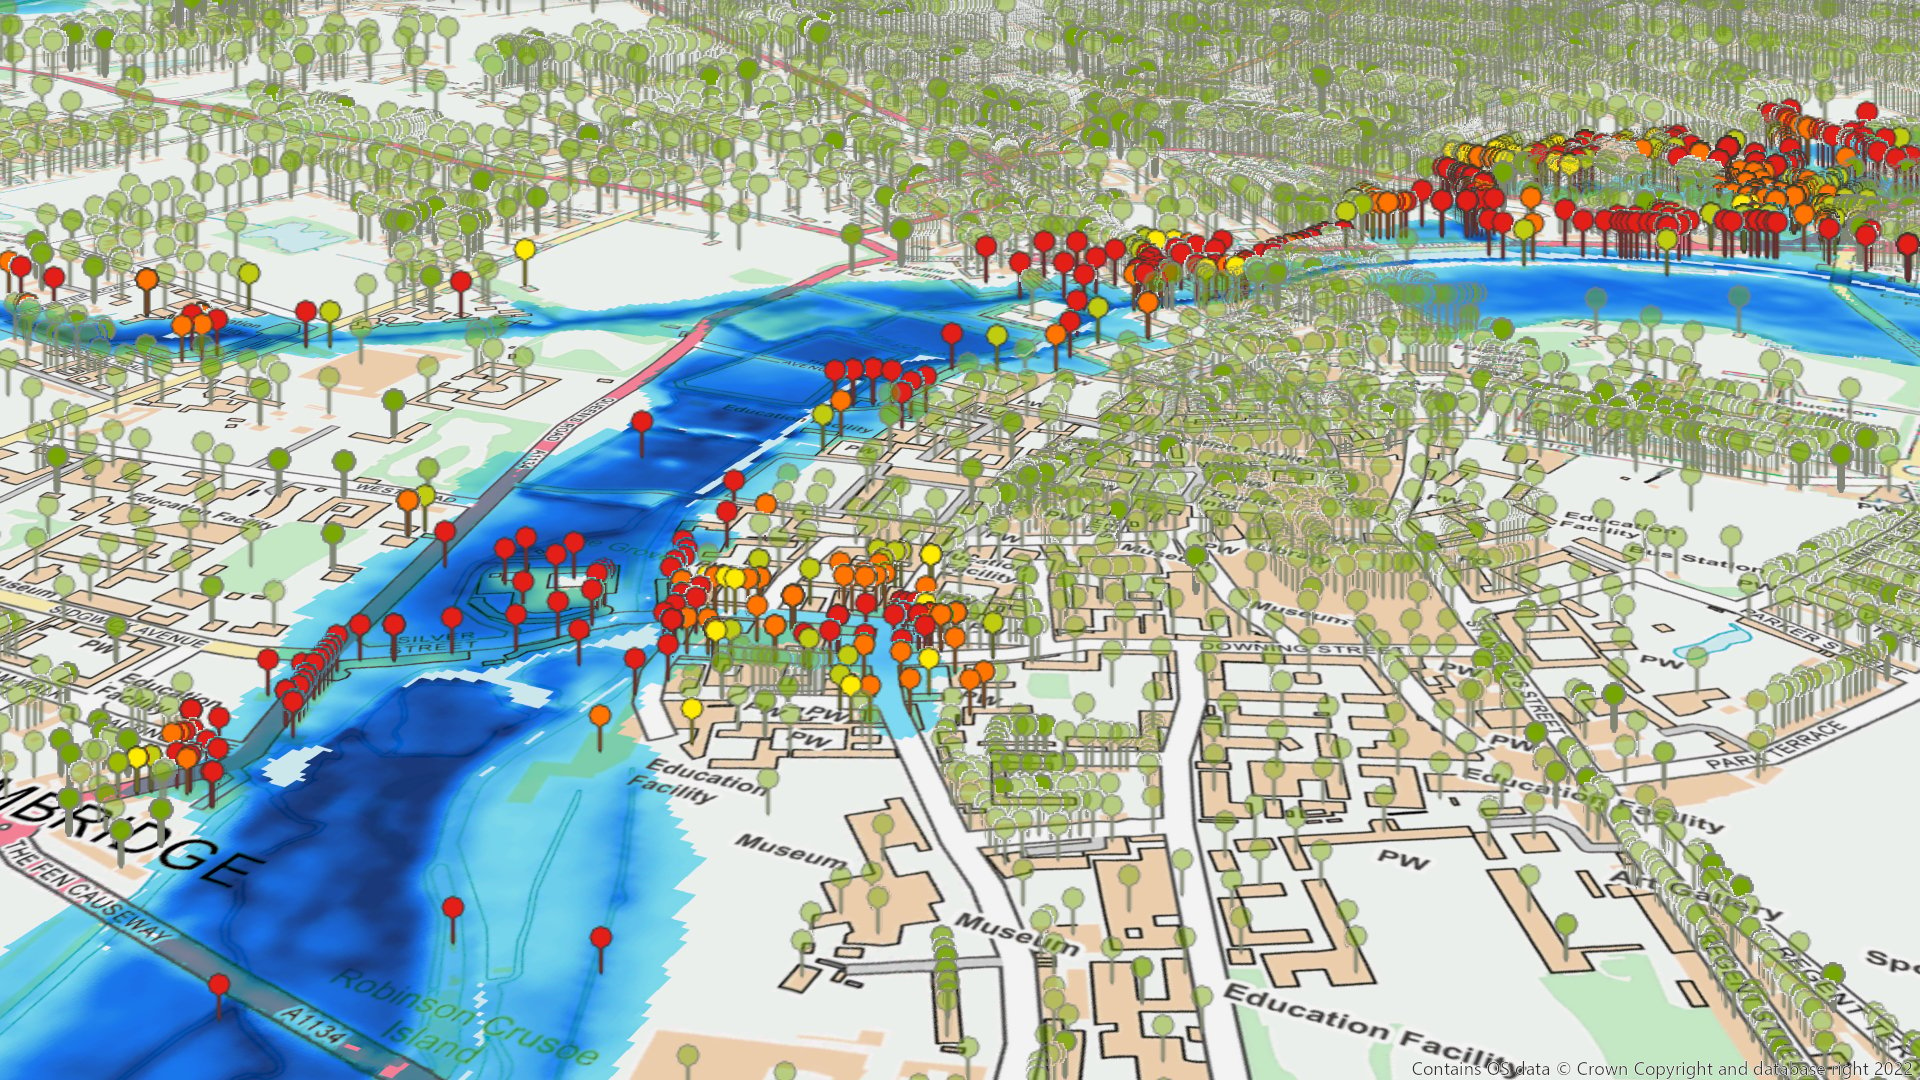 Visualisation of flood impact points